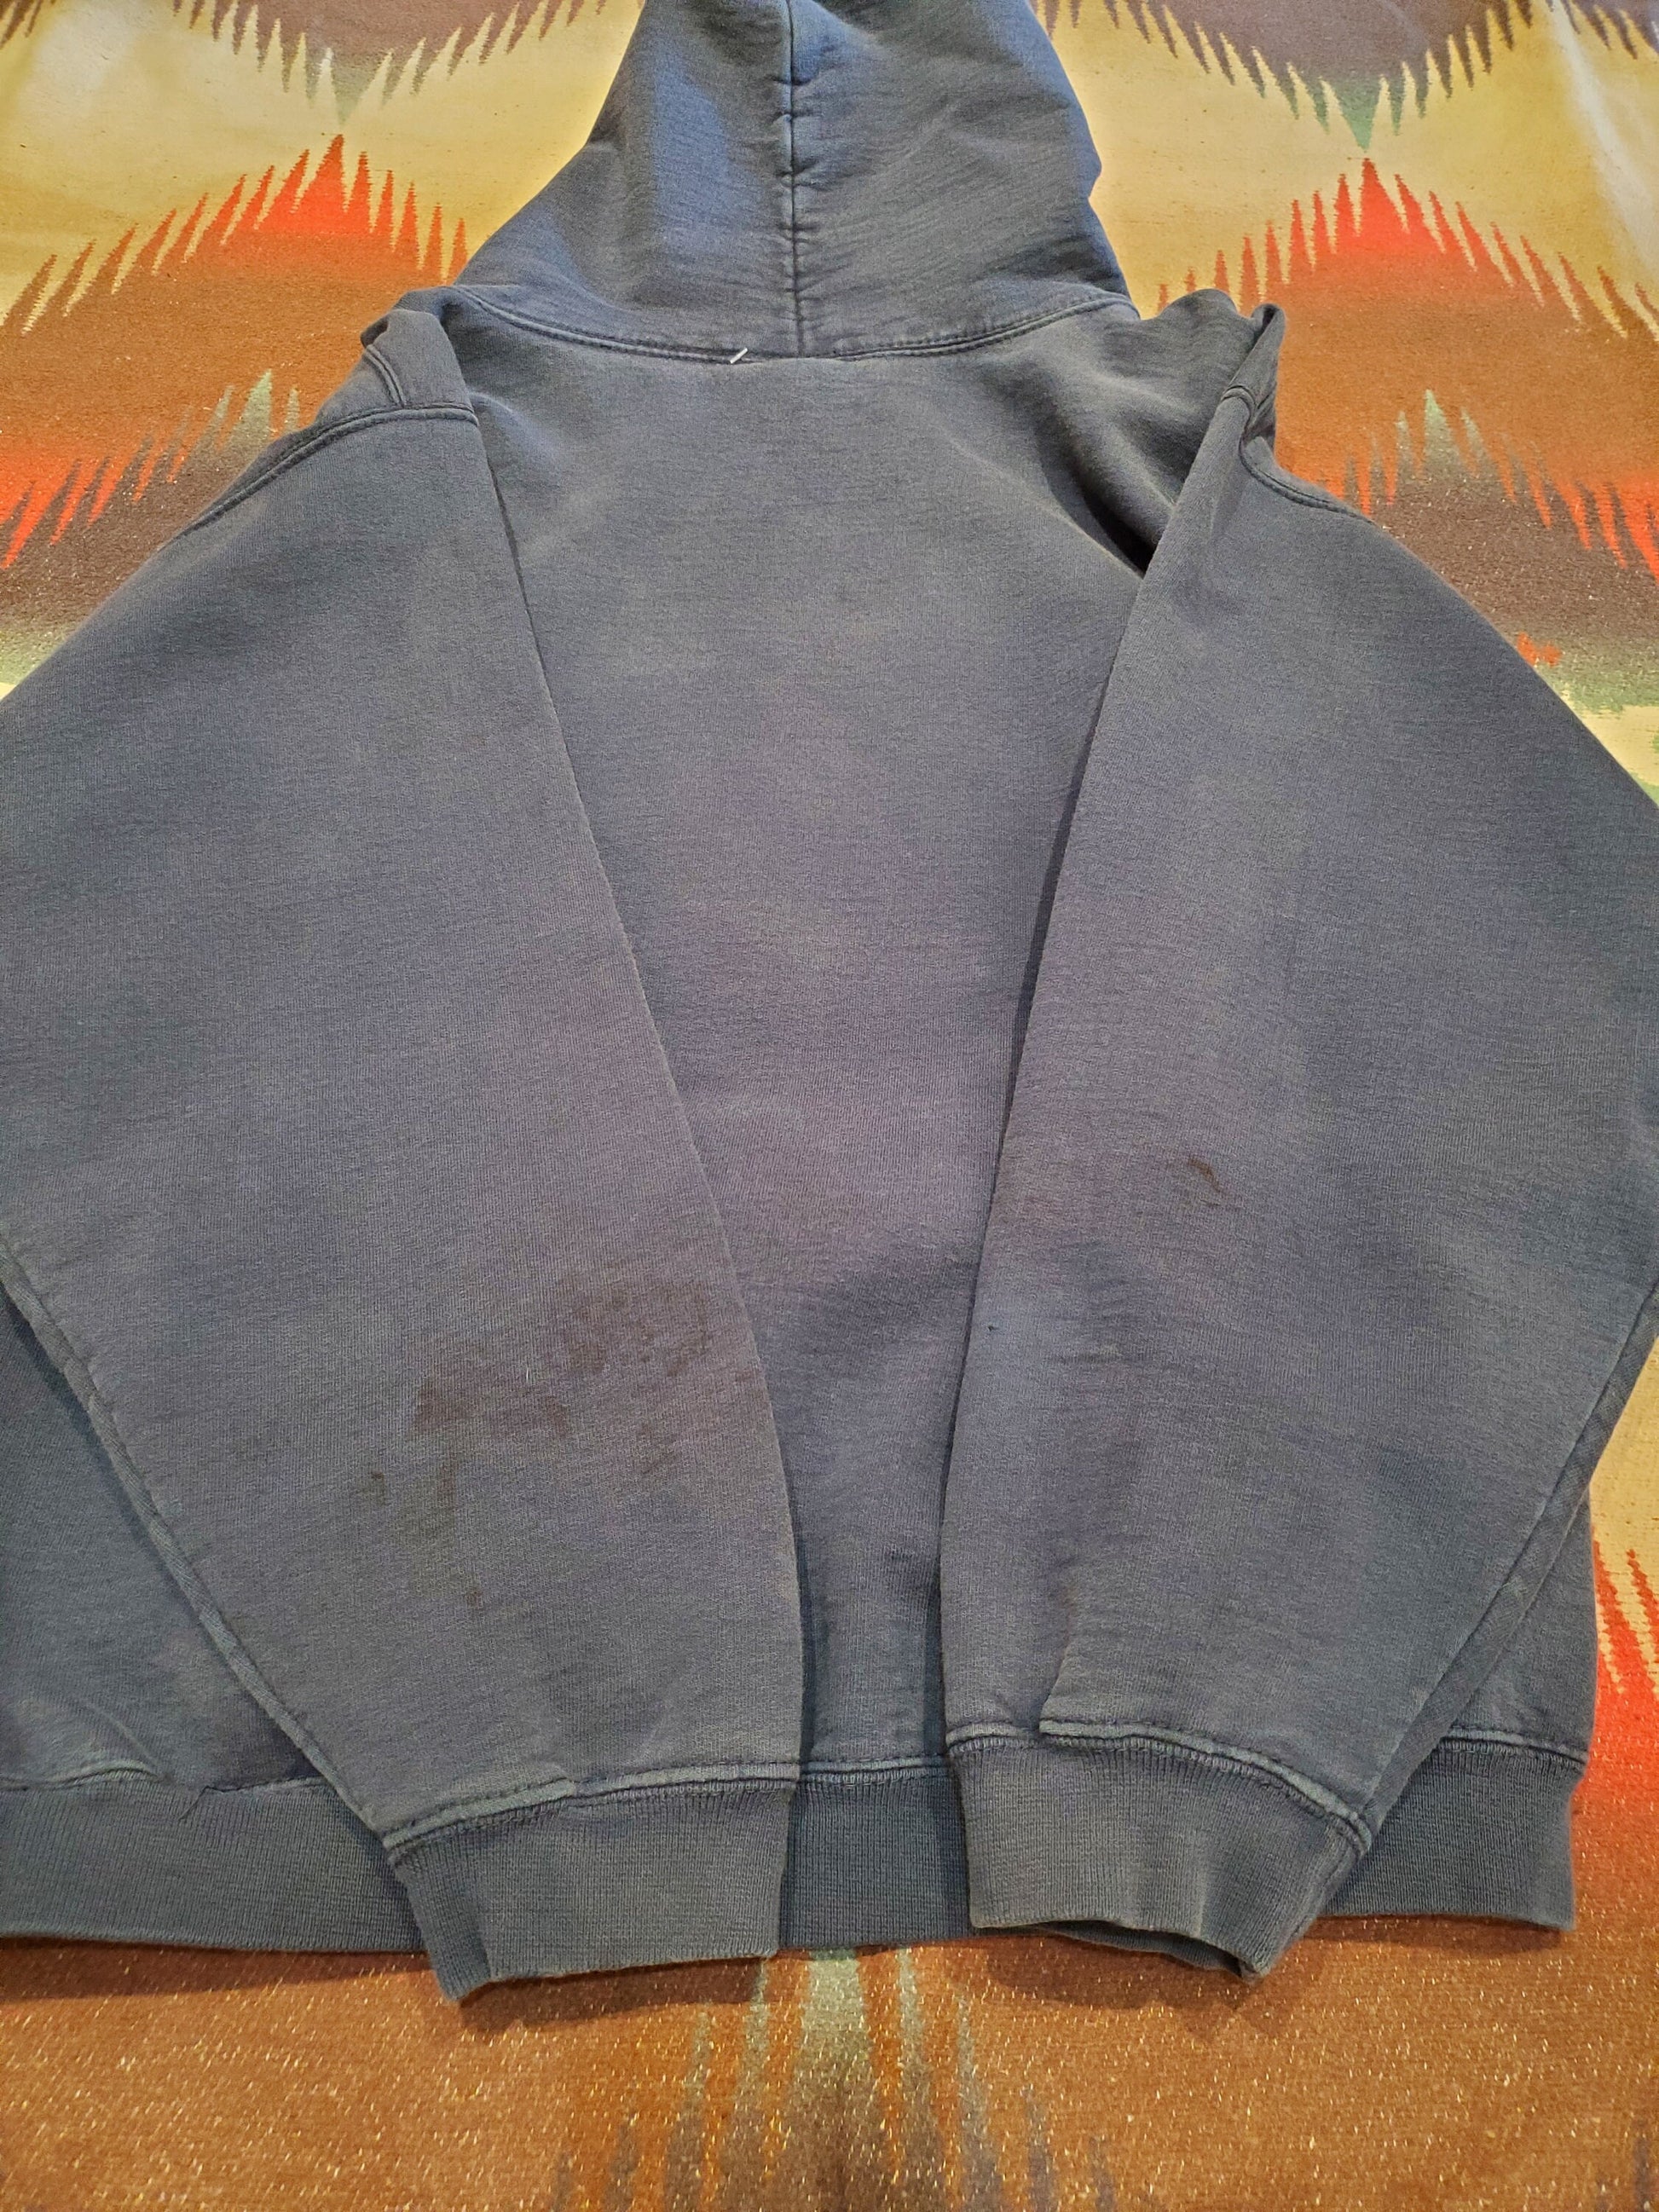 1990s/2000s Cotton Exchange Eastern Illinois University Hoodie Sweatshirt Made in USA Size M